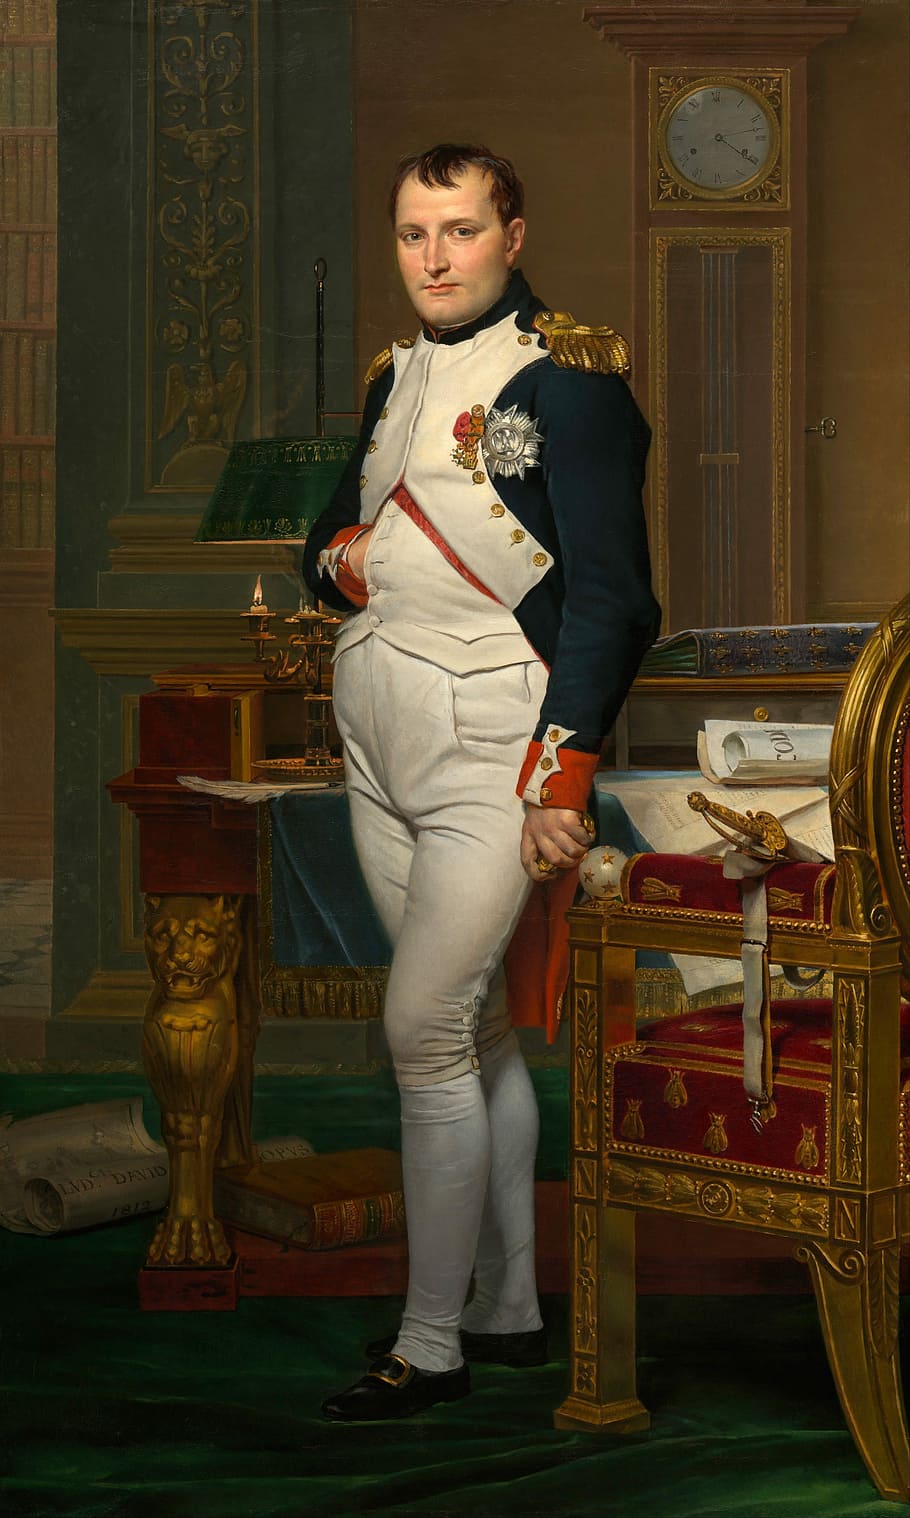 kaisar napolean, Potret, Kaisar, Napolean, foto, Prancis, domain publik, orang, satu Orang, keanggunan